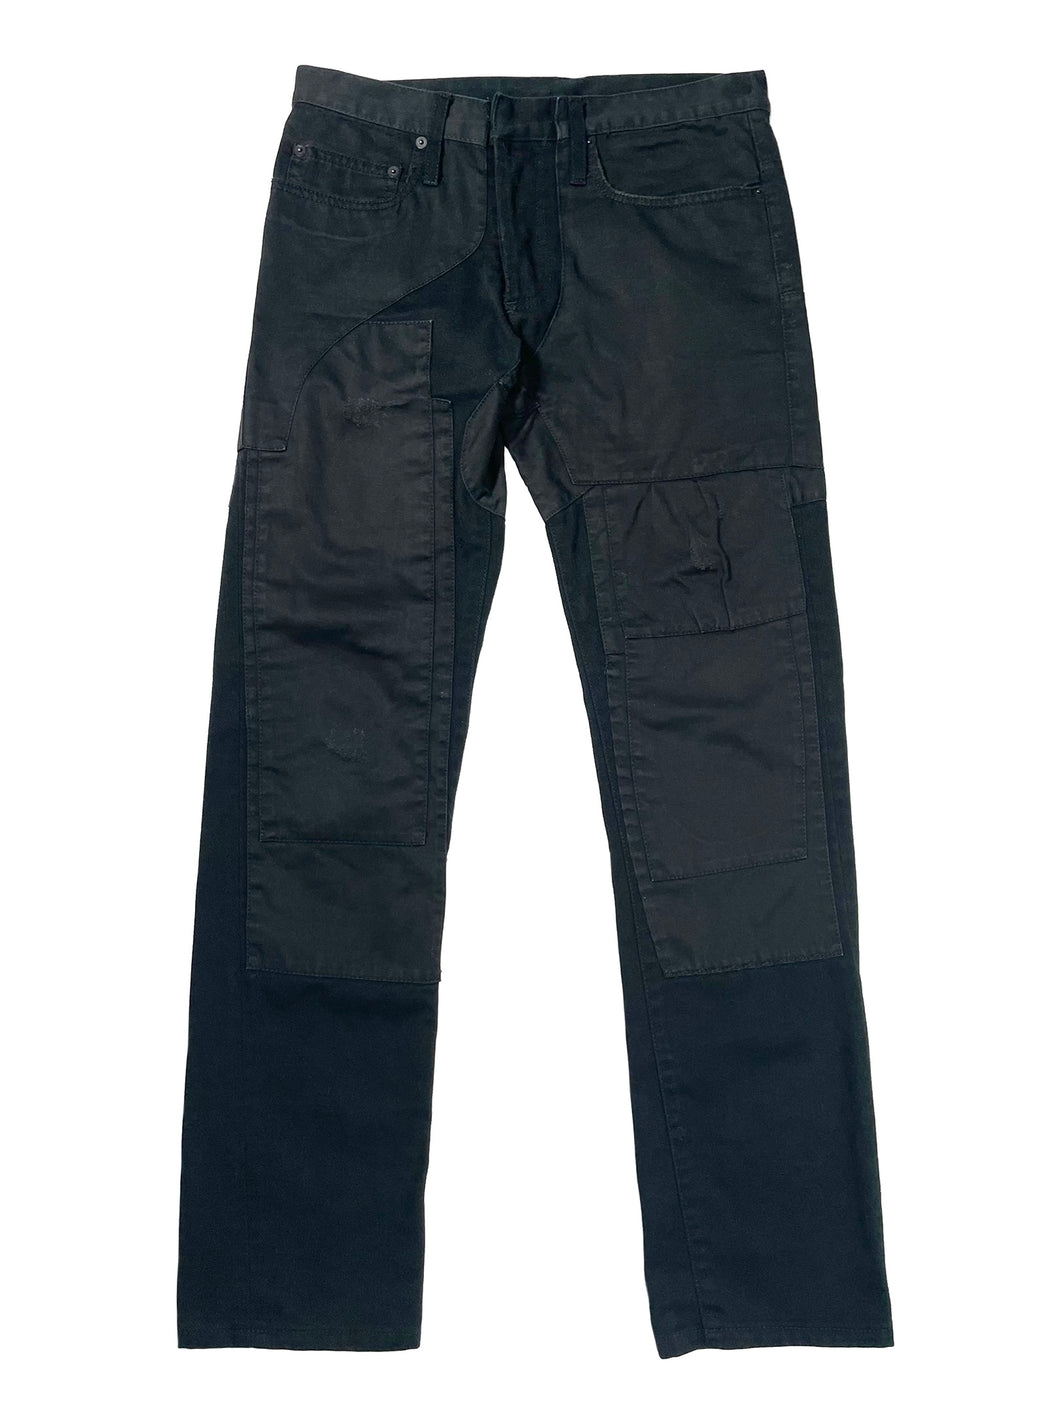 FW2007 Dior “Navigate” patchwork jeans